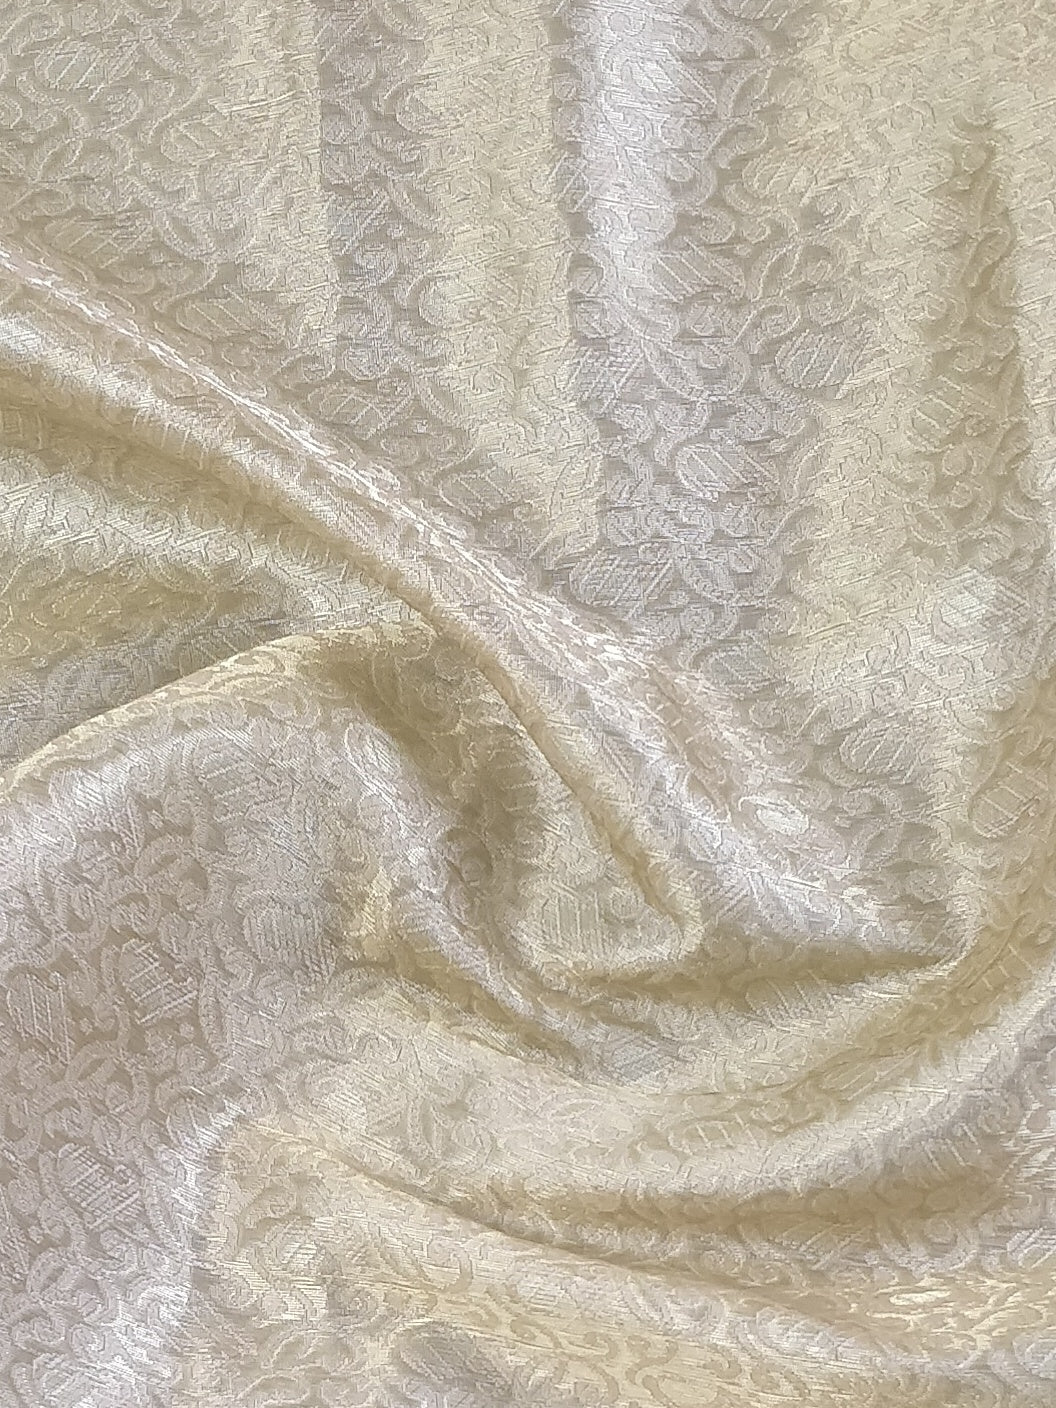 Banarasee Cotton Silk Saree With Zari Border With Gold Brocade Blouse